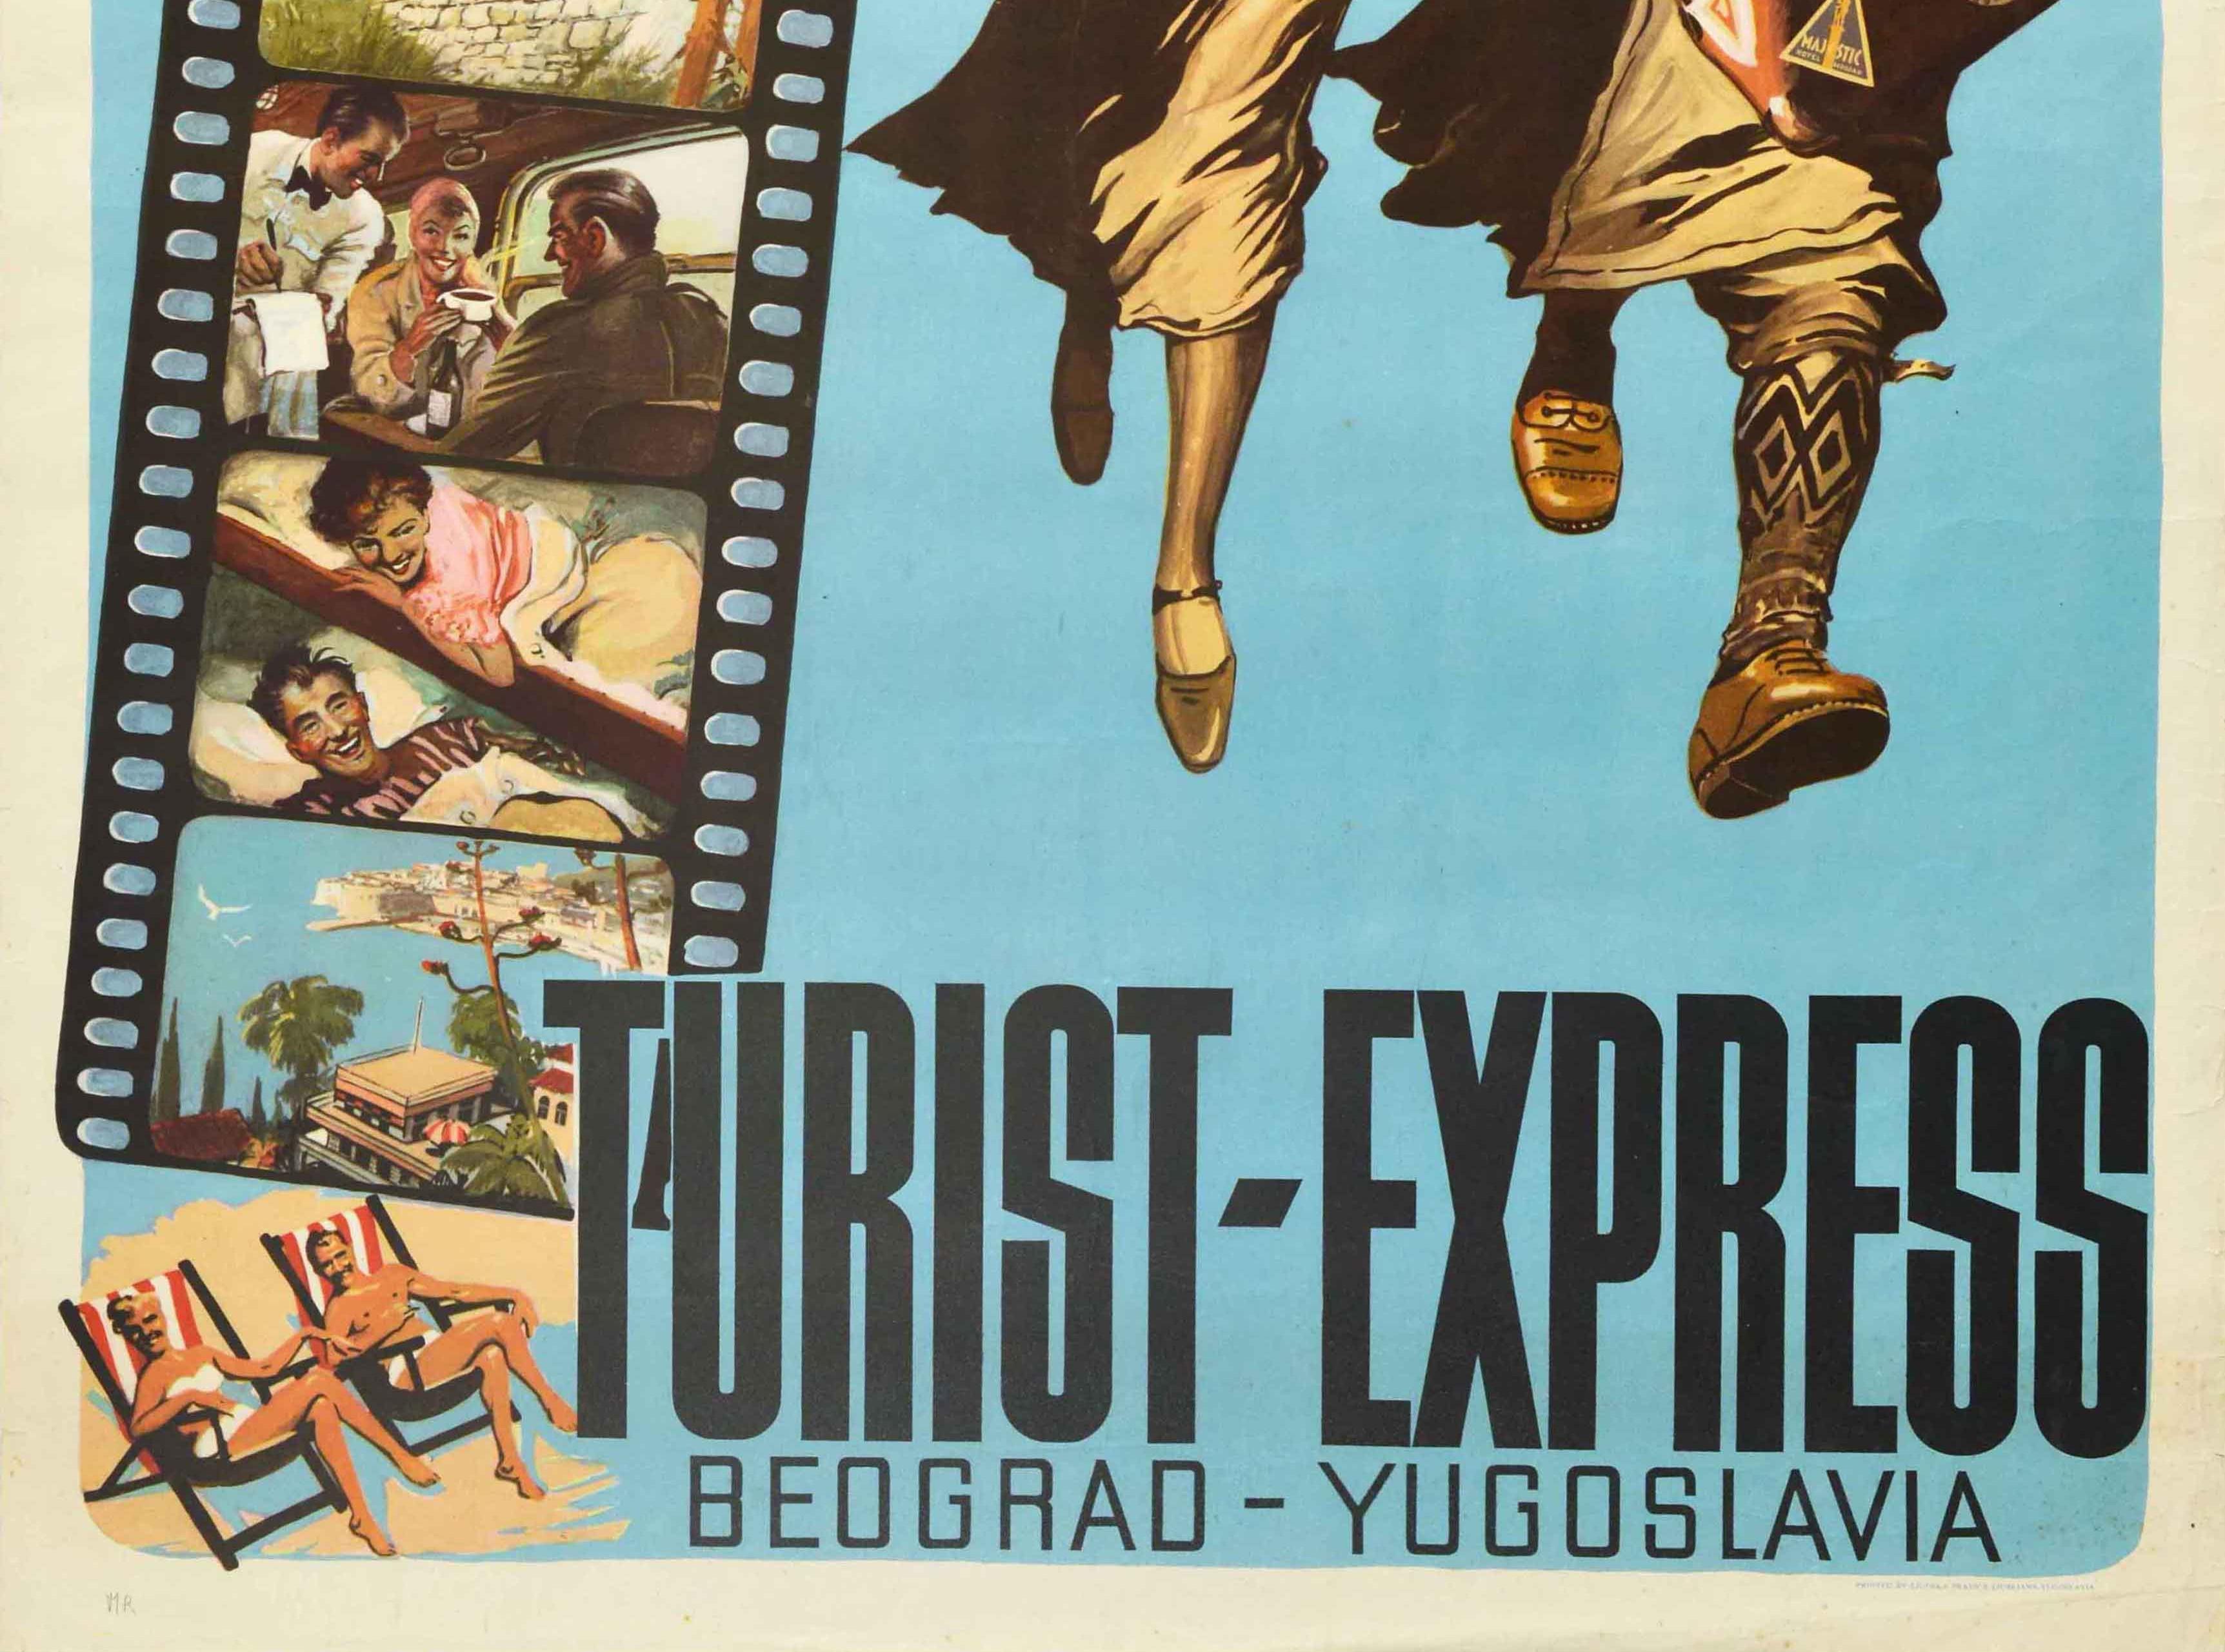 yugoslavia vintage poster